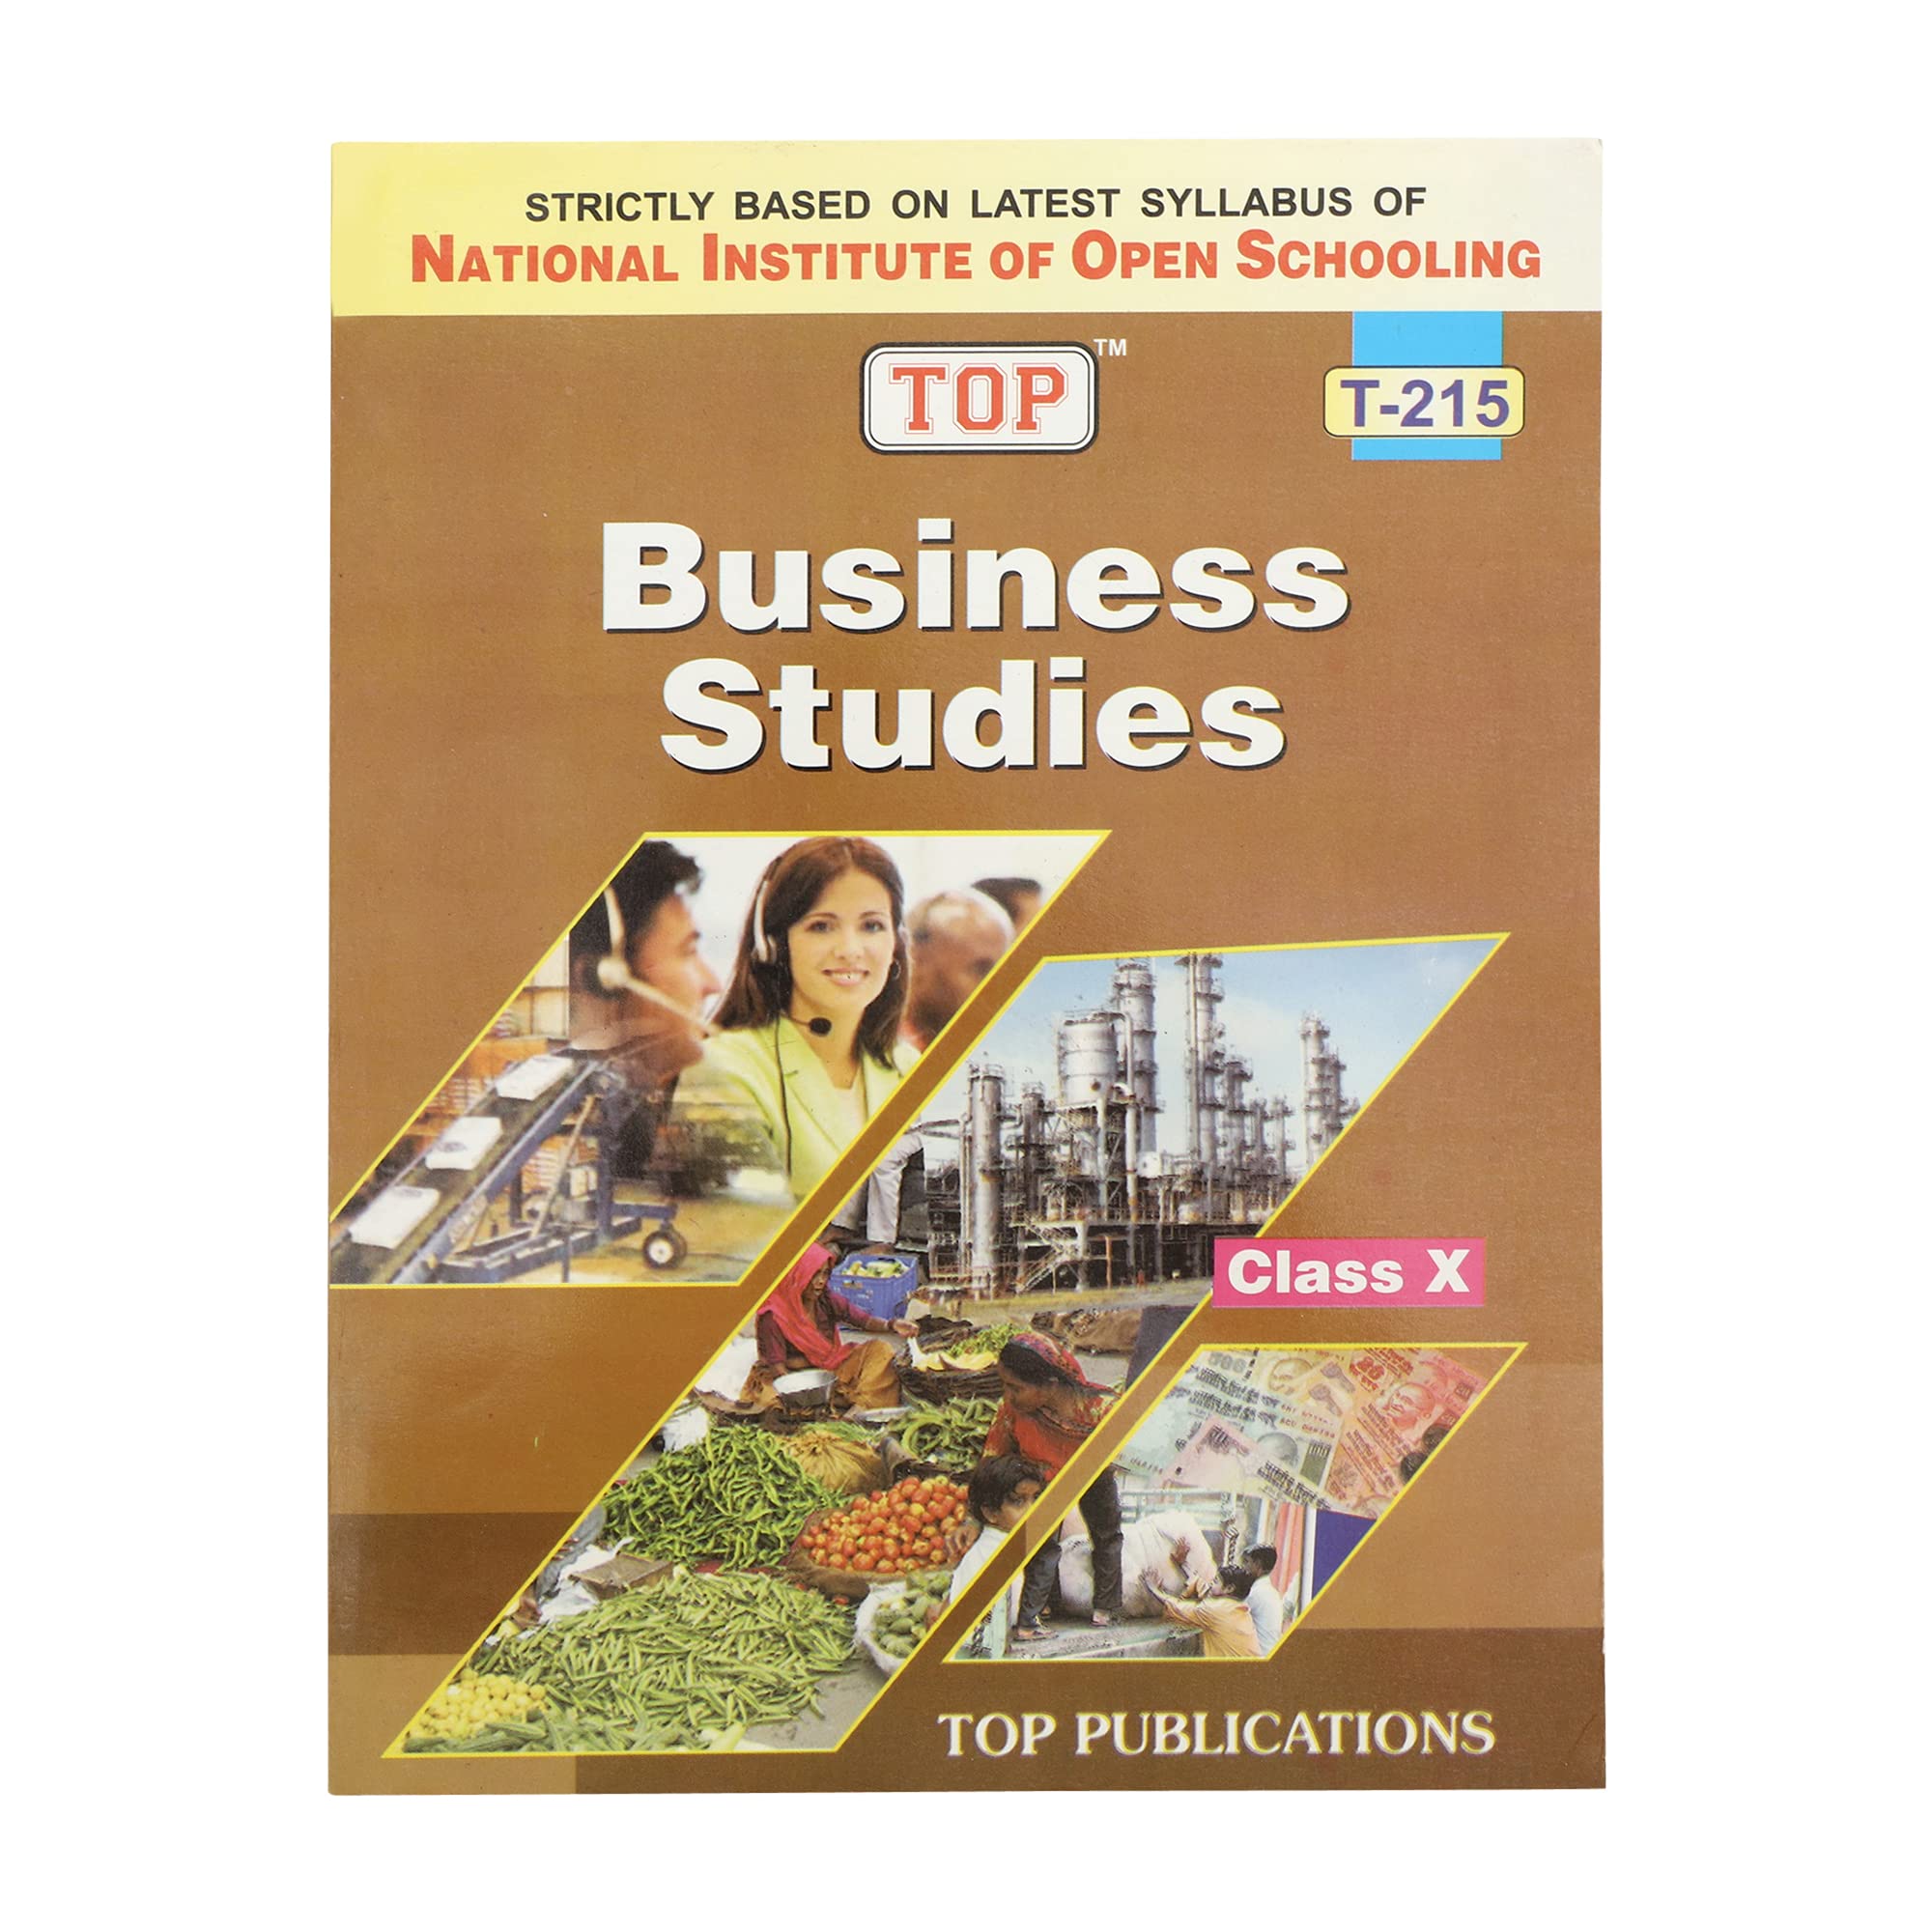  Business Studies (215)